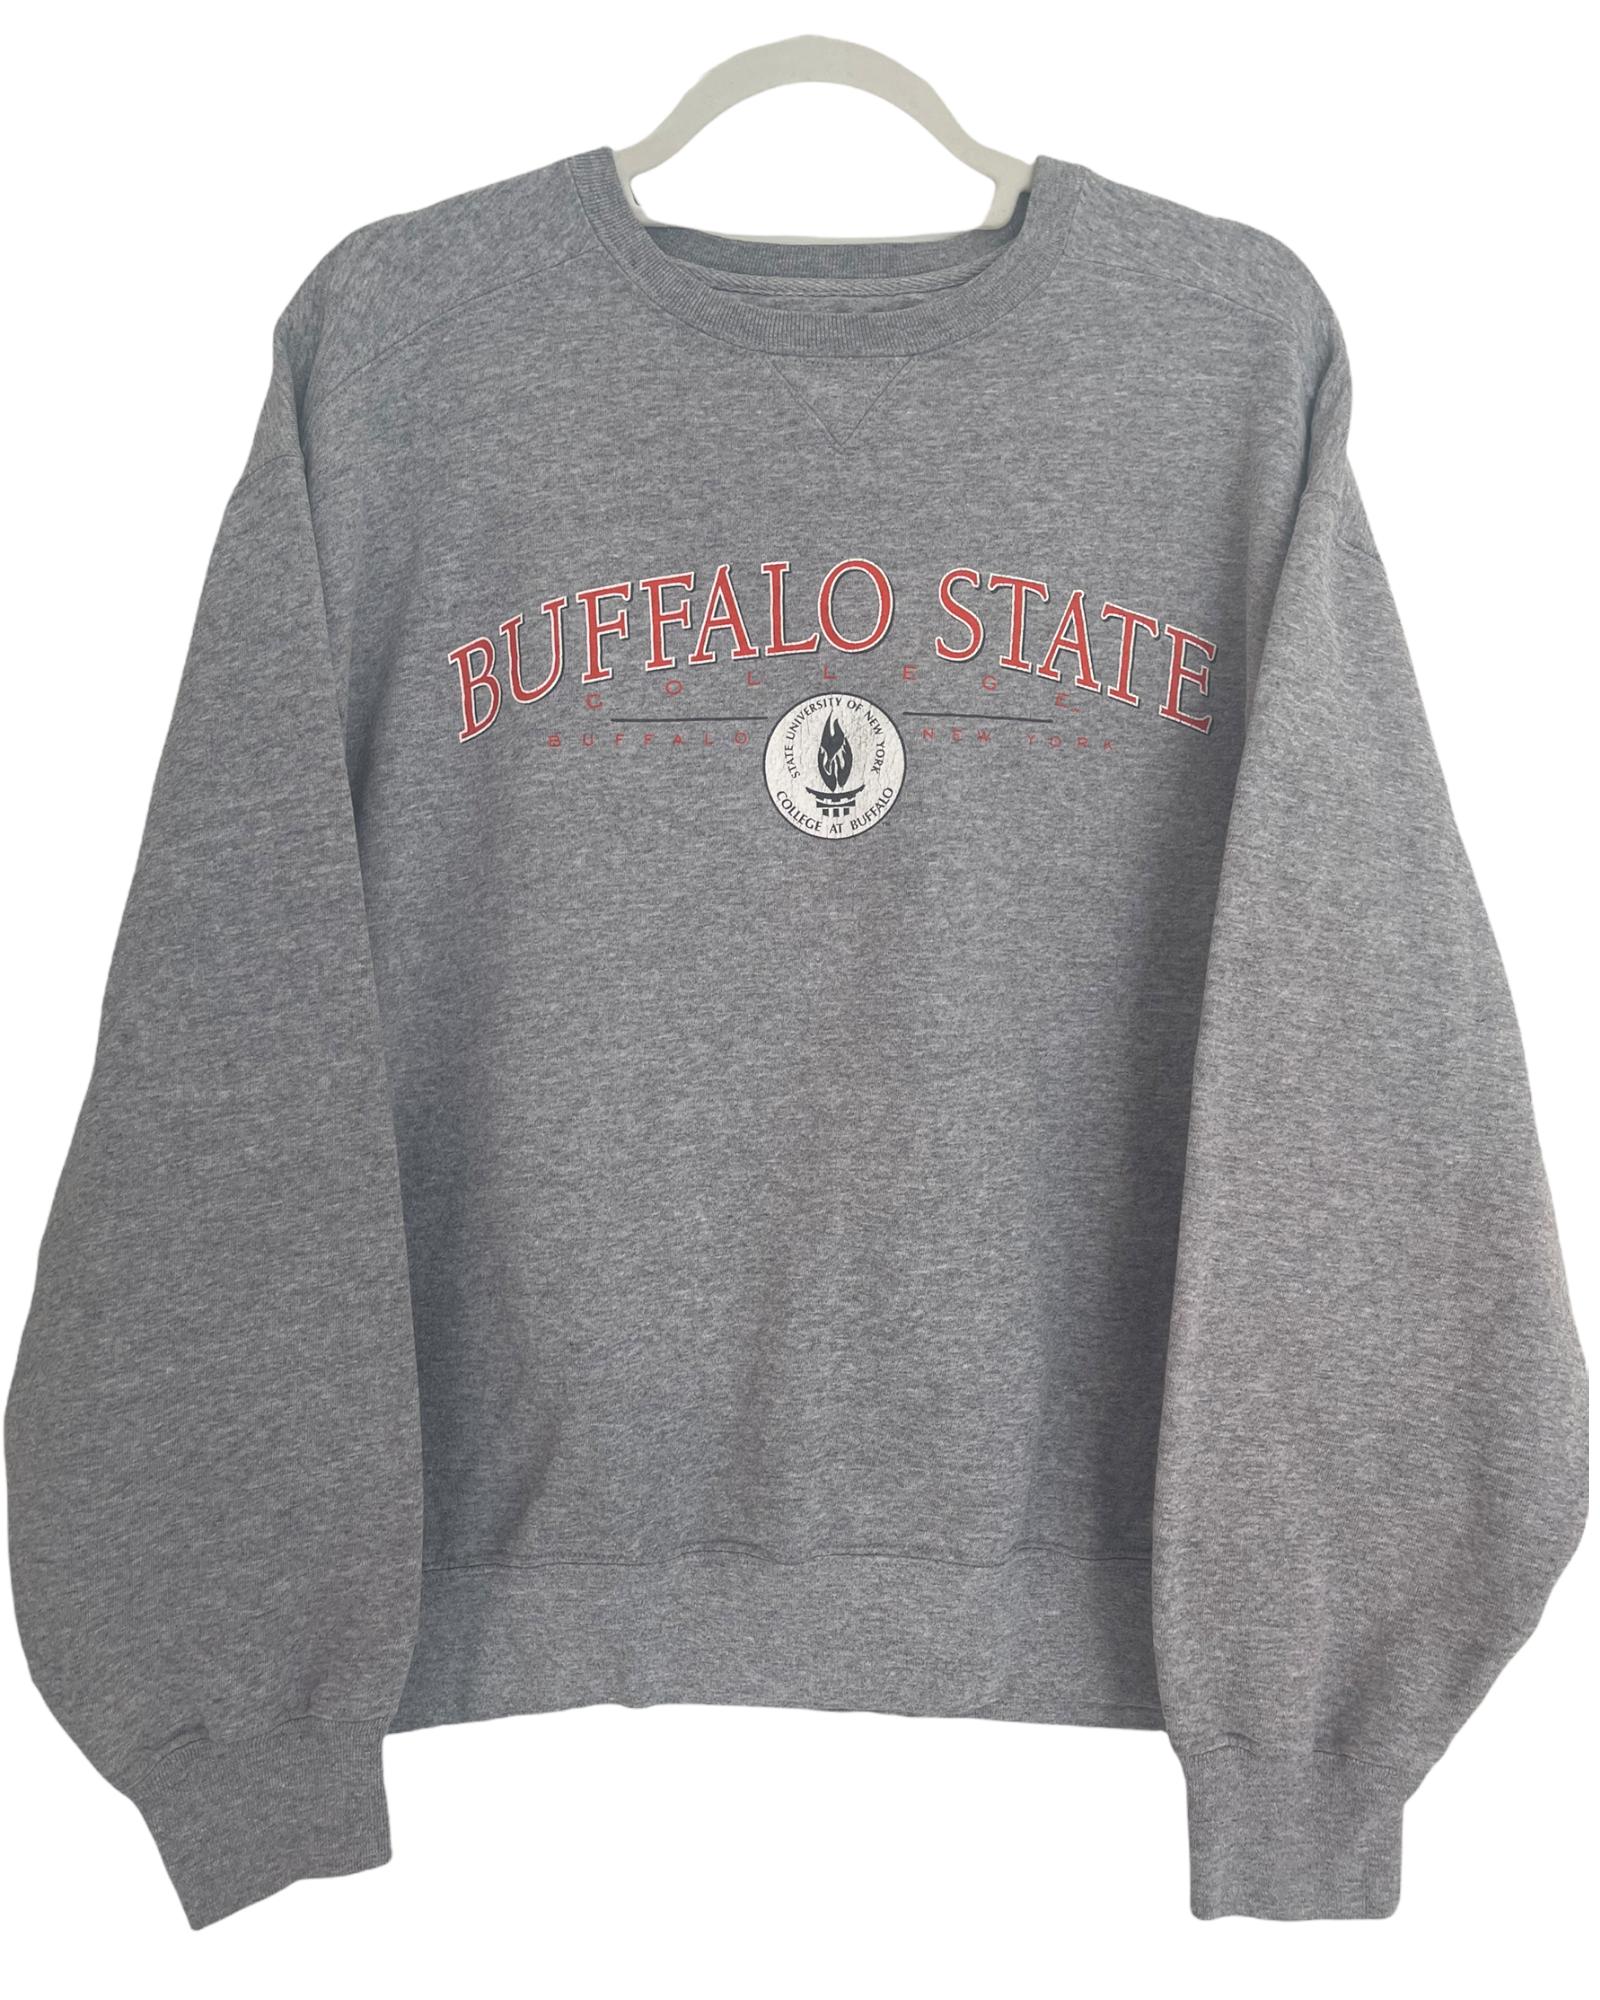 Buffalo State Vintage Sweatshirt – Roadie Couture